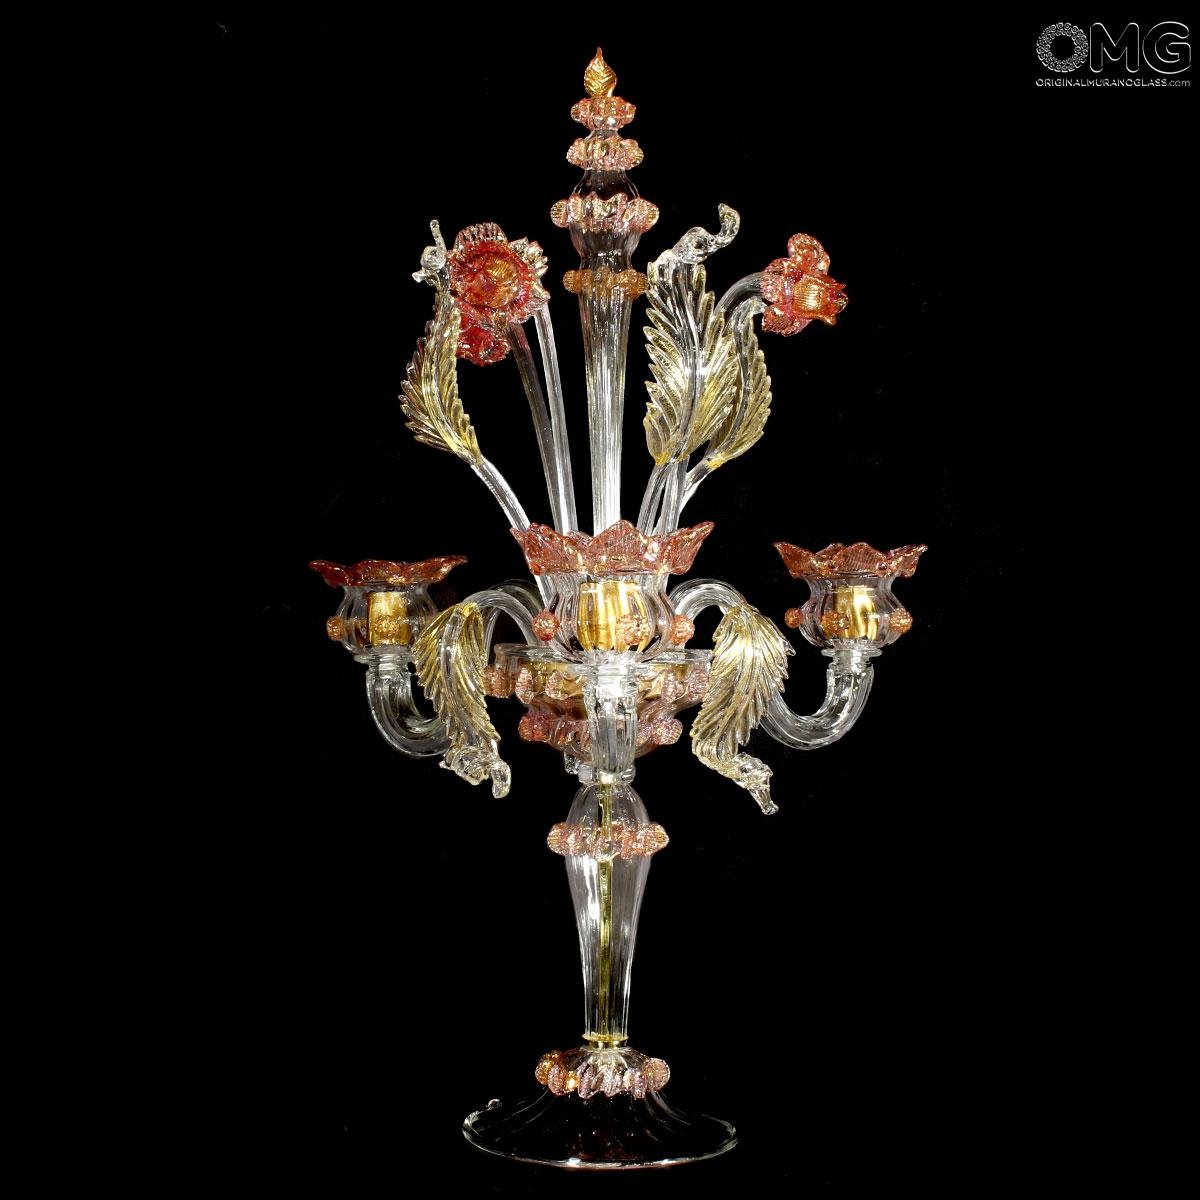 Venetian Chandeliers Classique Collection: Flambeau Ca Manzoni